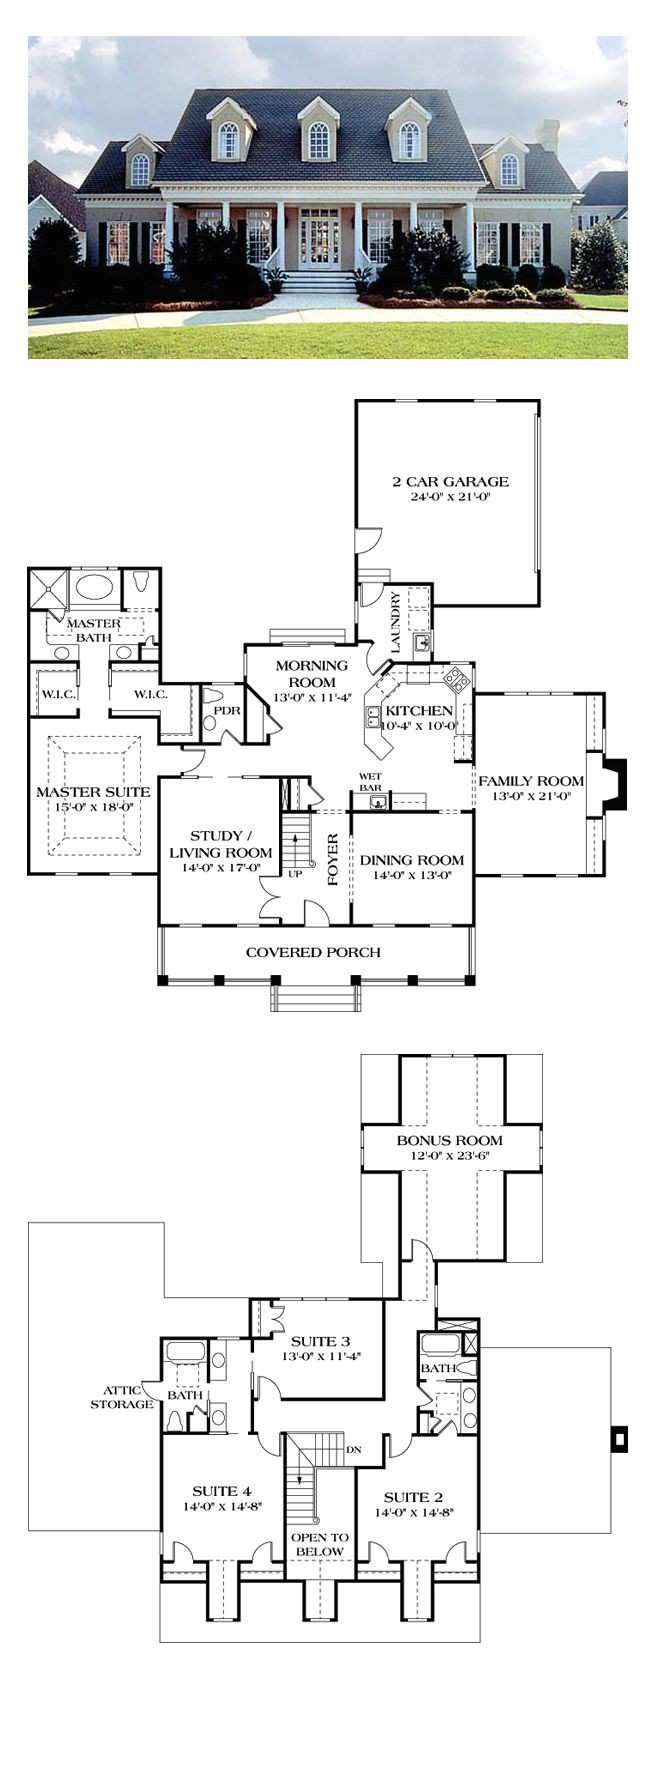 single family home floor plans luxury 135 best house plans images on pinterest